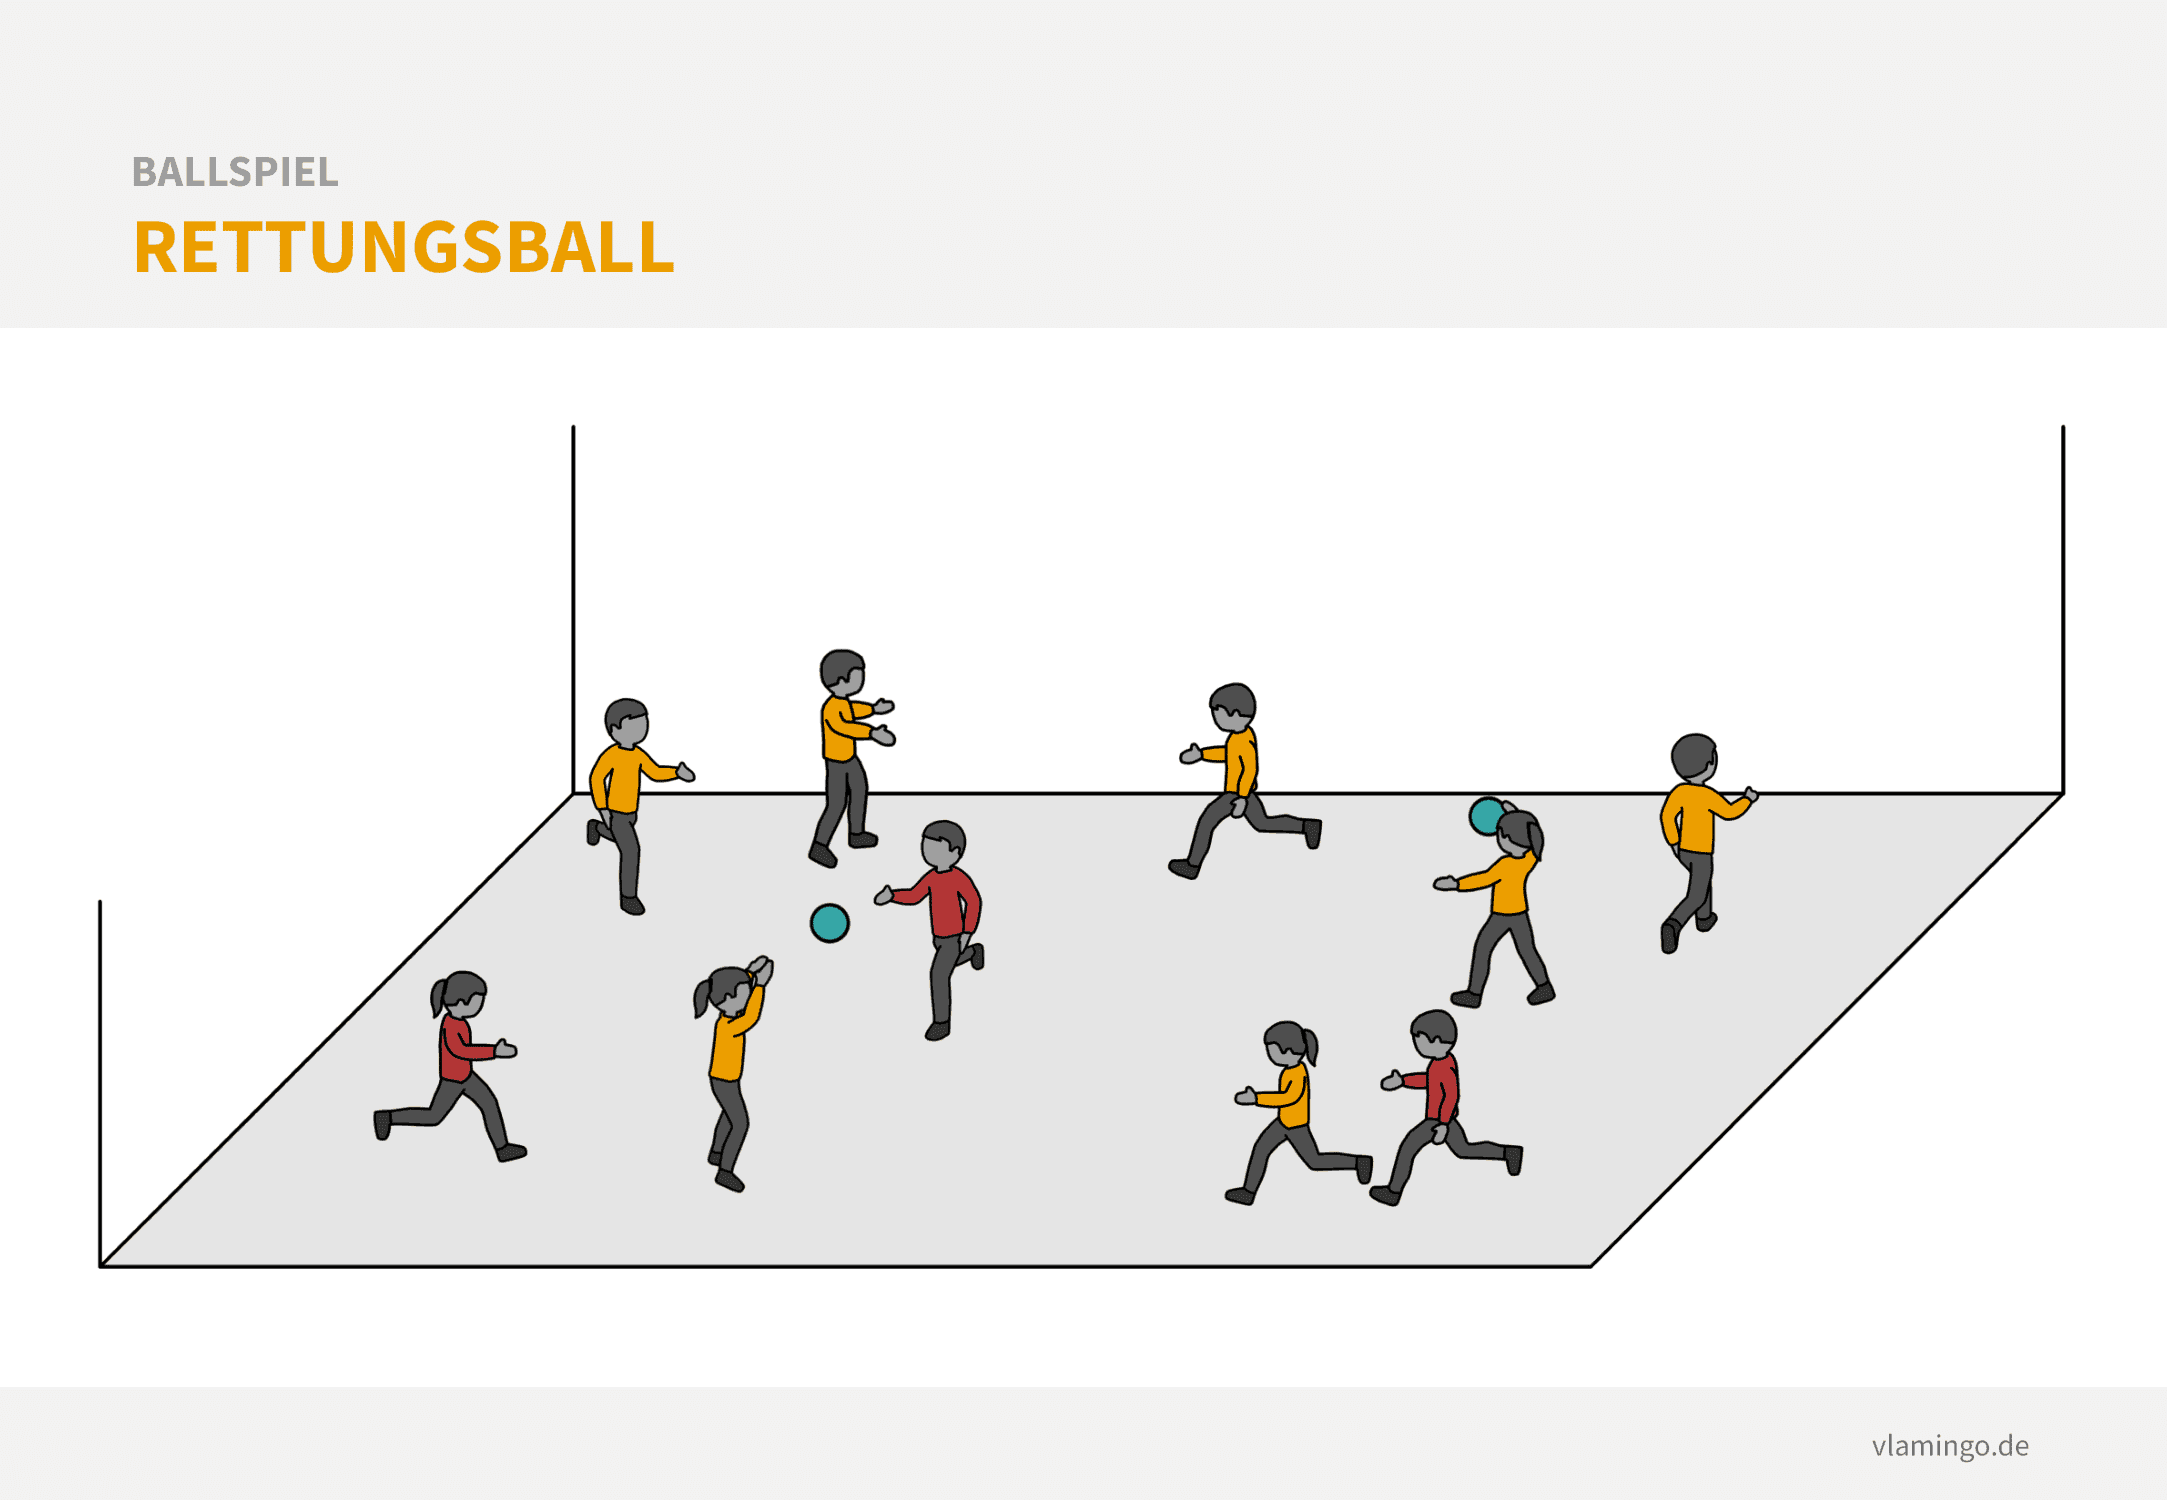 Ballspiel: Rettungsball